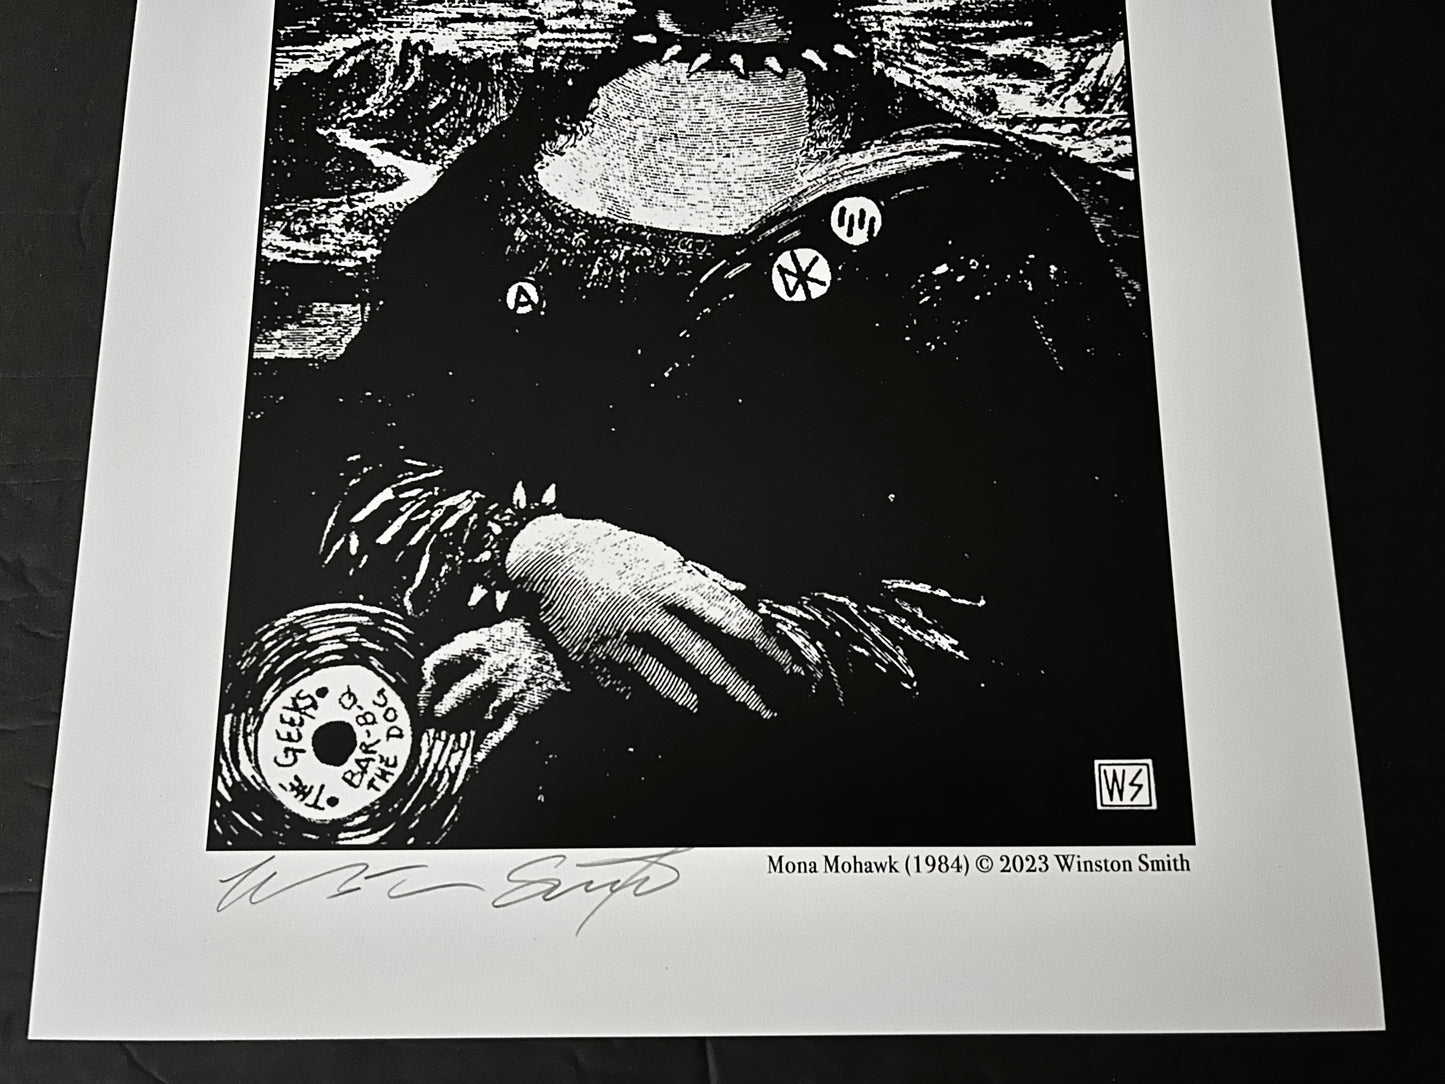 Winston Smith "Mona Mohawk" Print (1984)